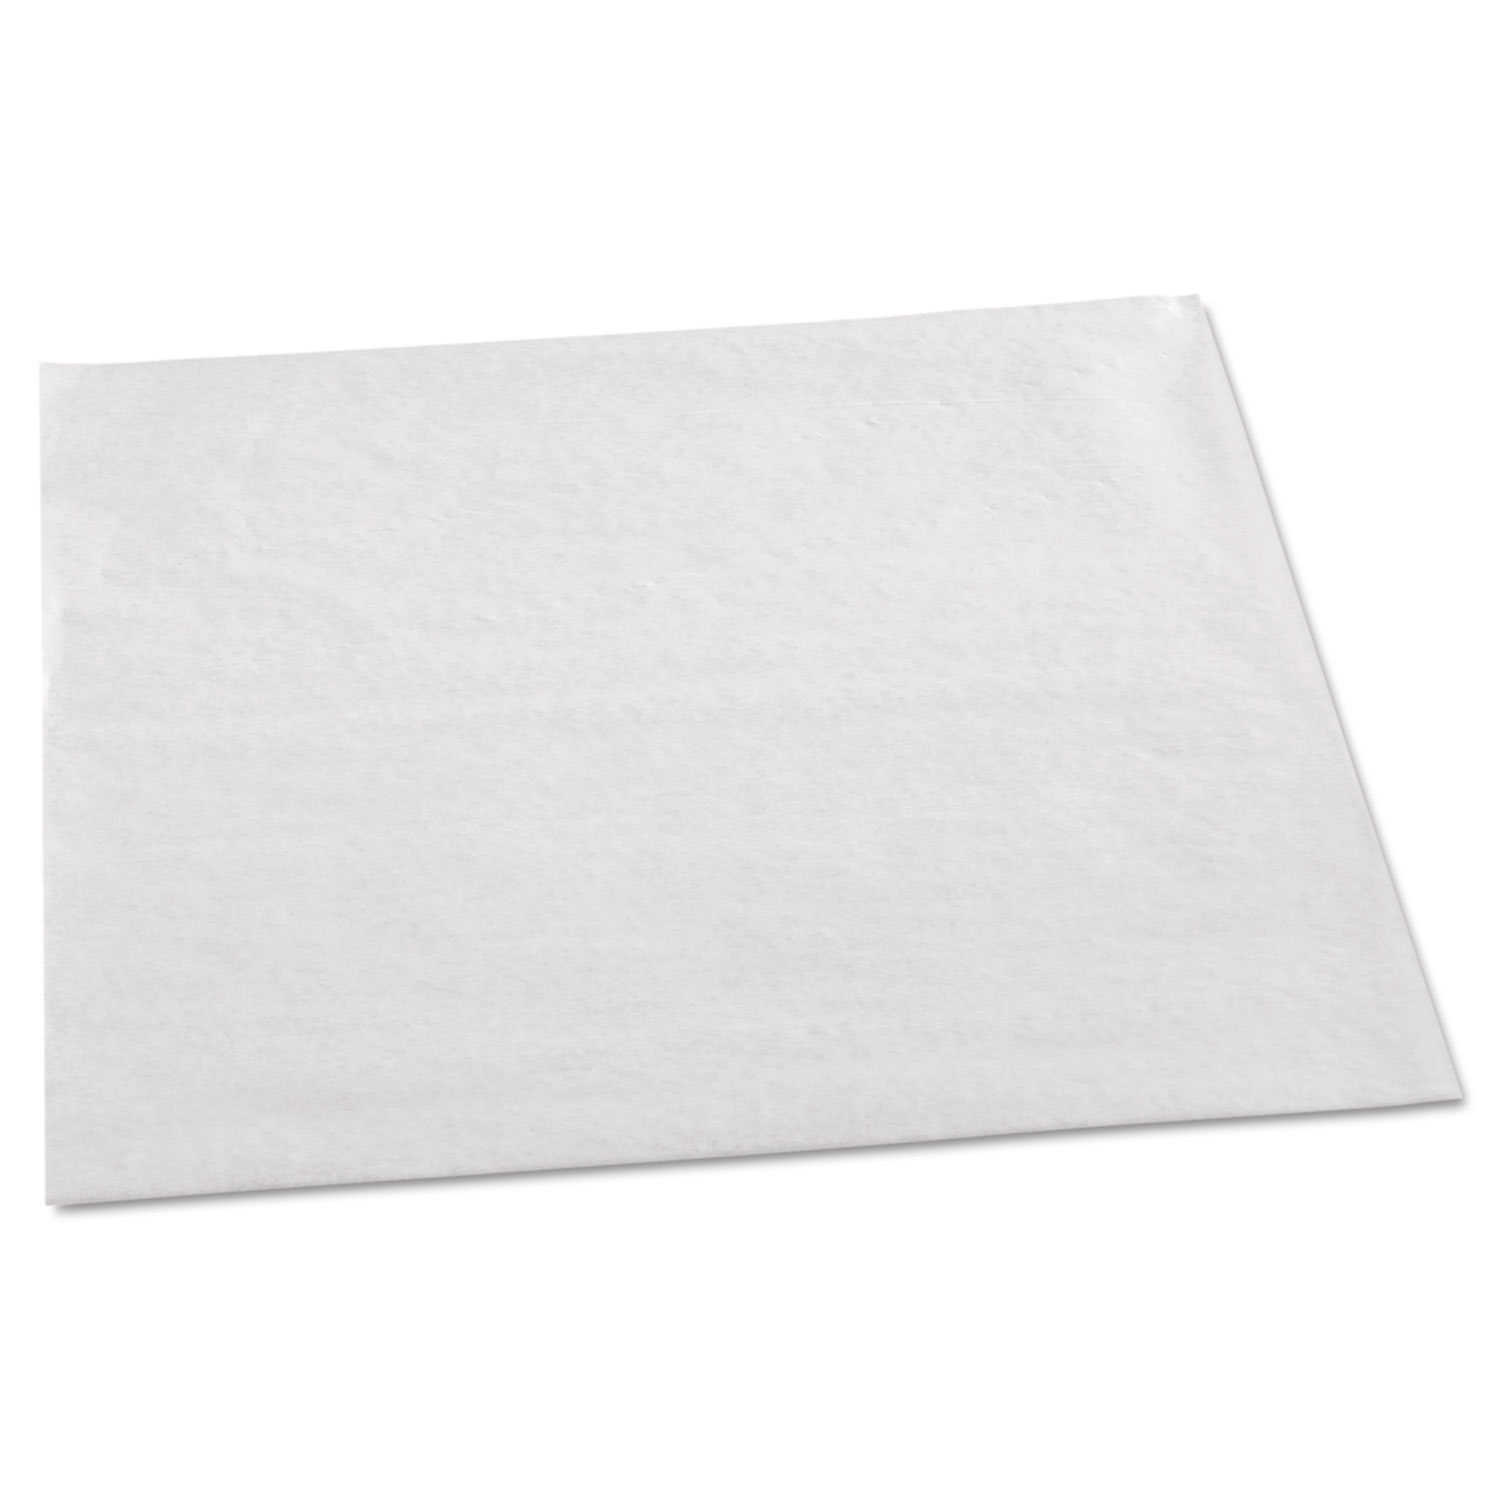  Marcal MCD 8223 Deli Wrap Dry Waxed Paper Flat Sheets, 15 x 15, White, 1000/Pack, 3 Packs/Carton (MCD8223) 